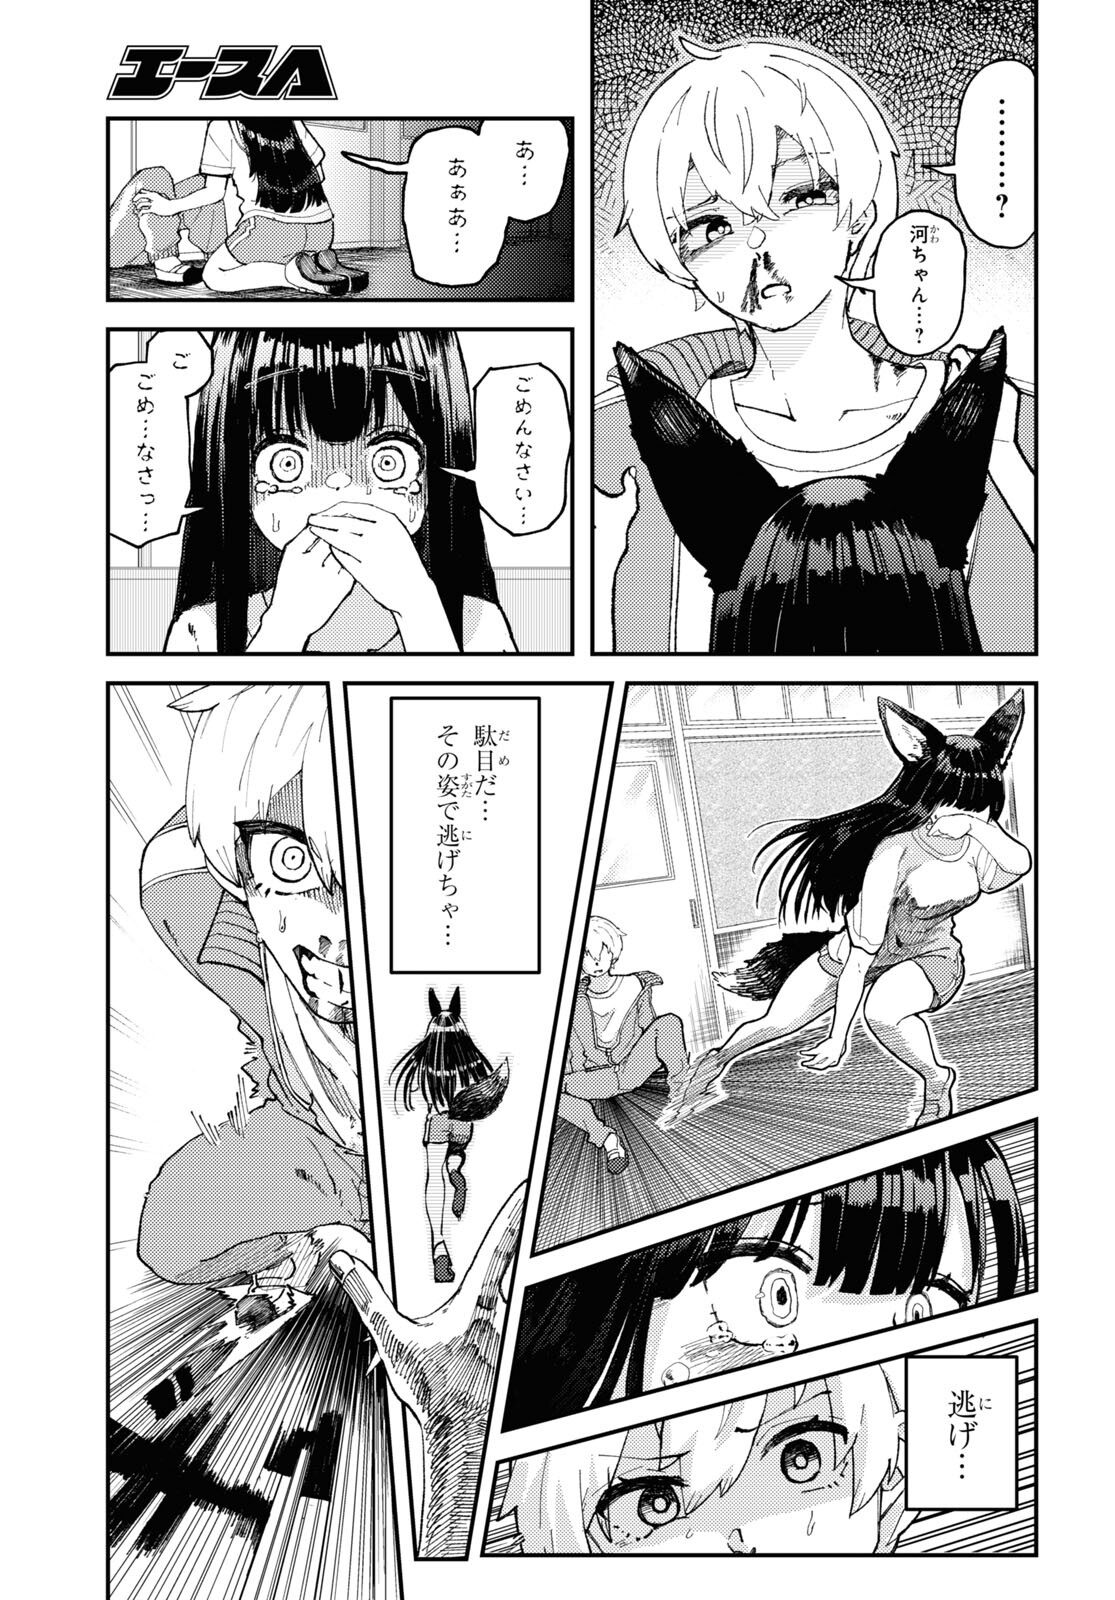 Garuru Girl - Chapter 1 - Page 24